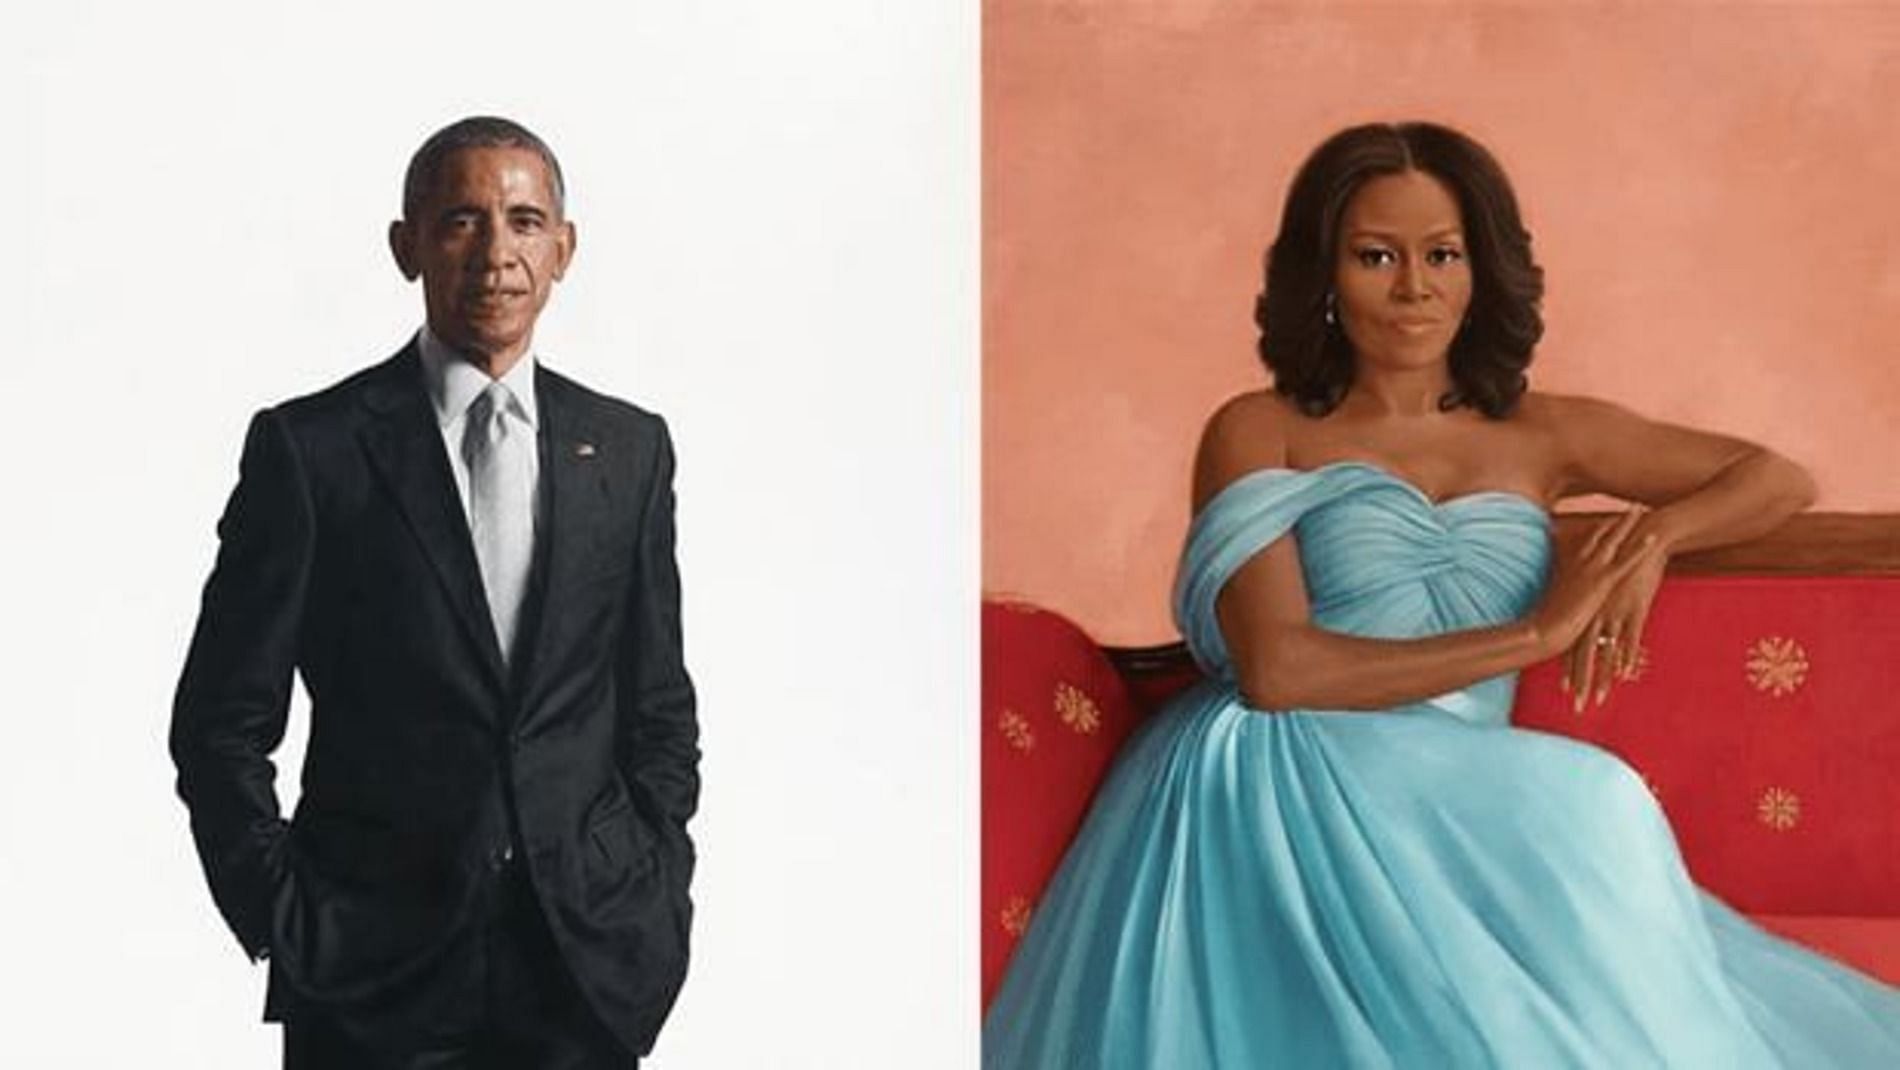 Portraits of Barack Obama and Michelle Obama (Image via Obama Foundation)